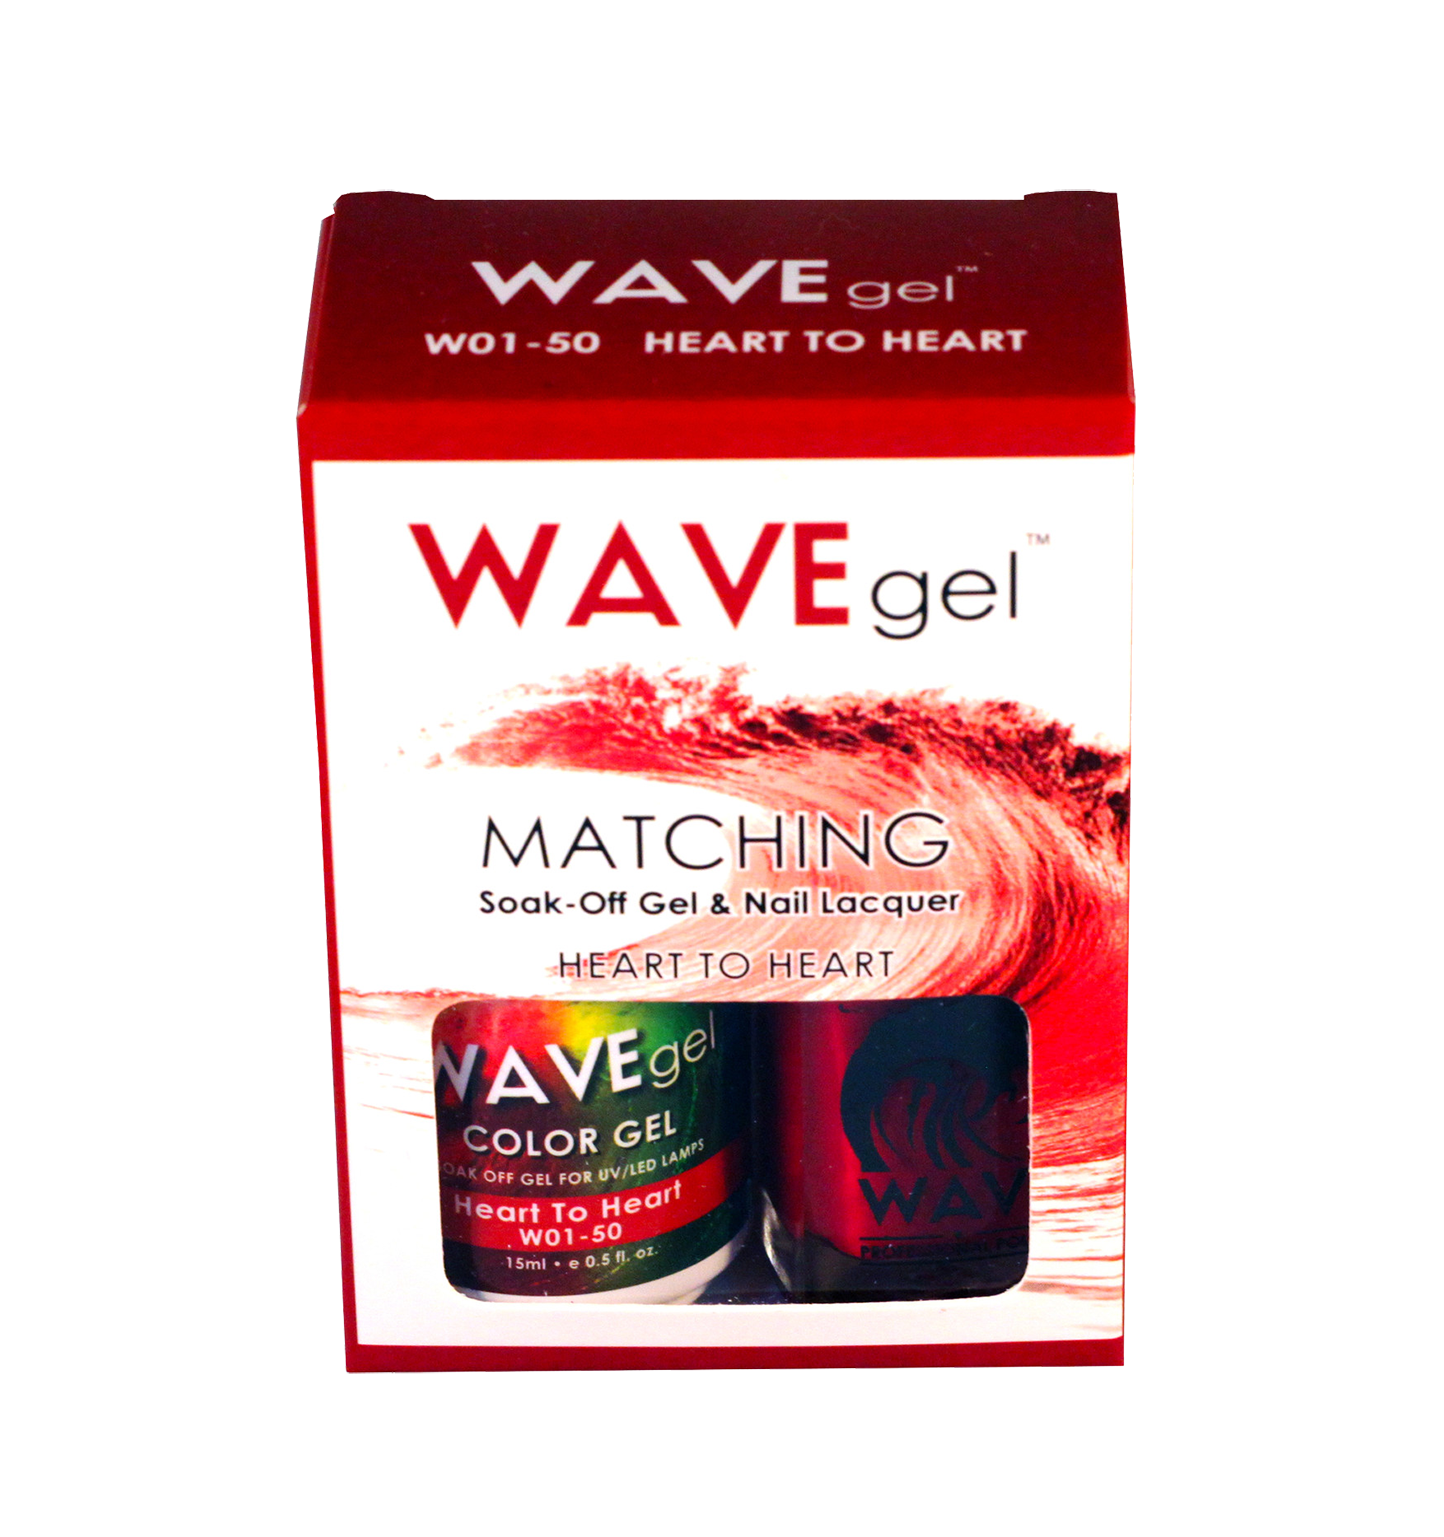 Wavegel Matching